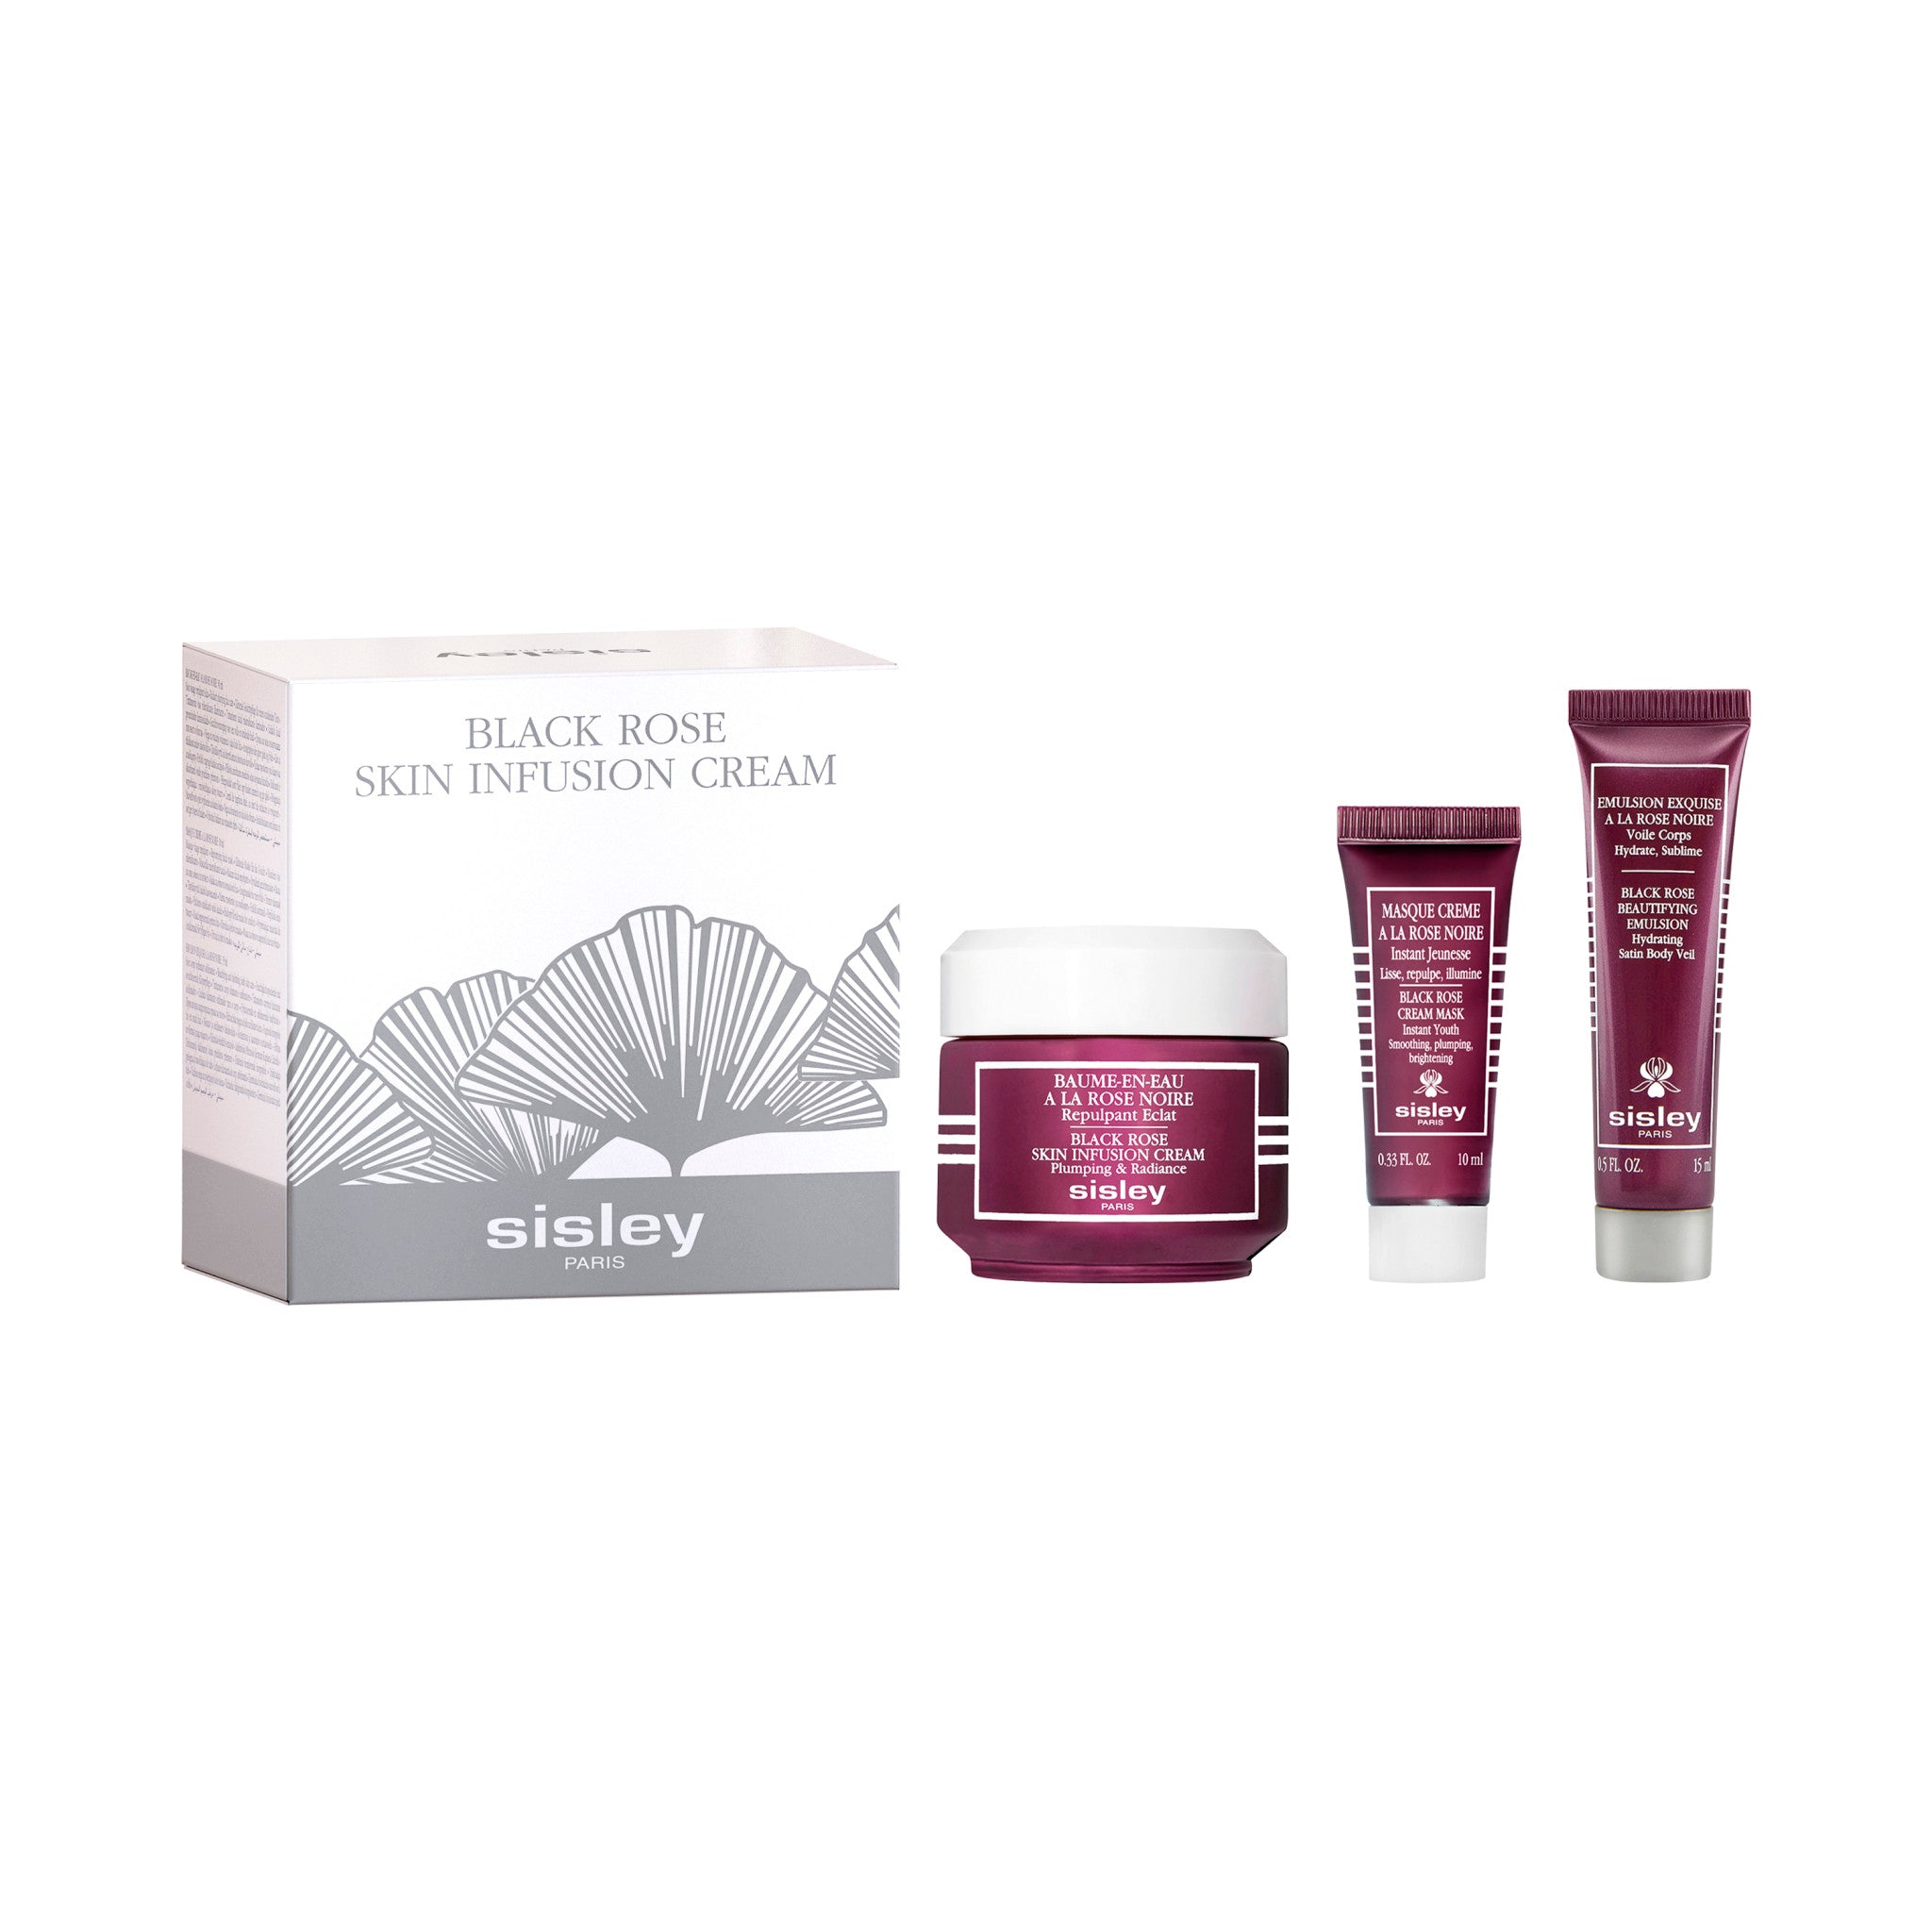 Sisley-Paris Black Rose Skin Infusion Cream Discovery Program main image.